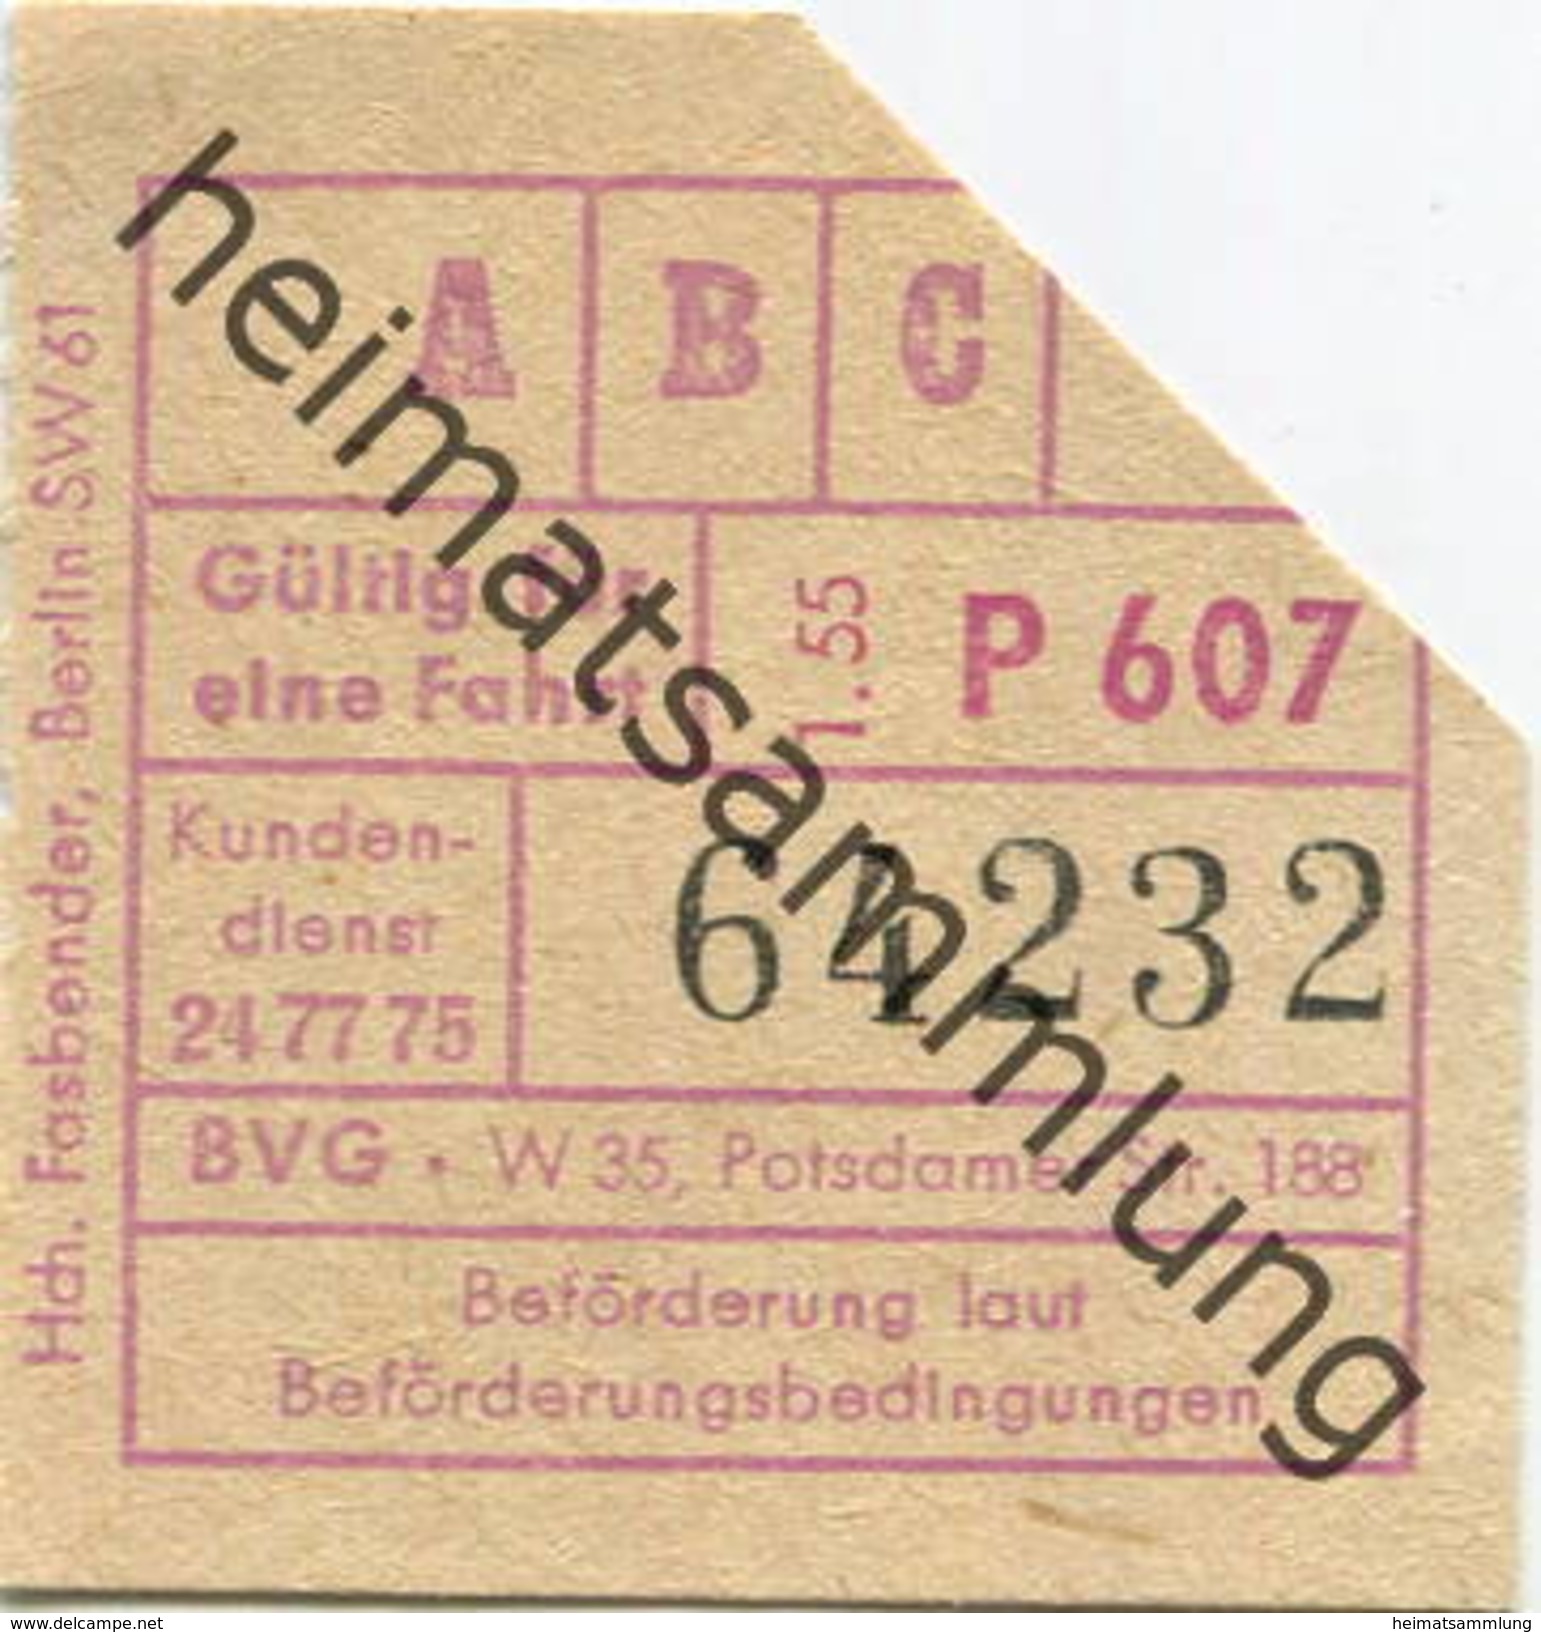 Deutschland - Berlin - BVG - Berlin Potsdamer Str. 188 - Fahrschein 1955 - Europa